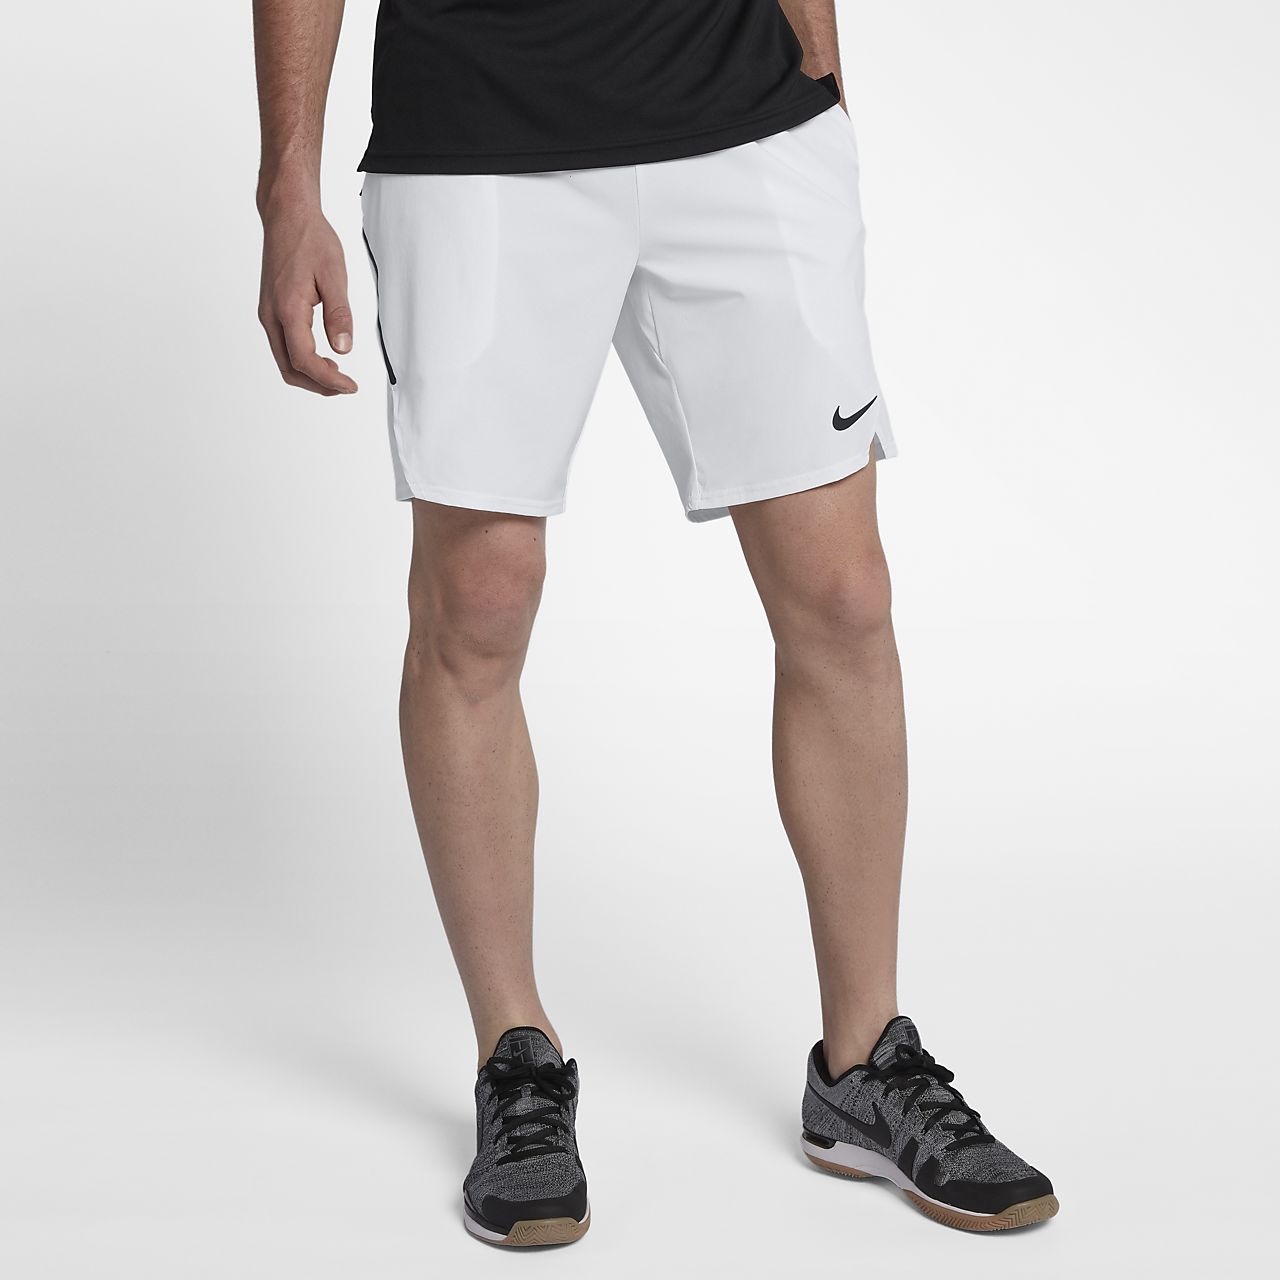 nike flex tennis shorts